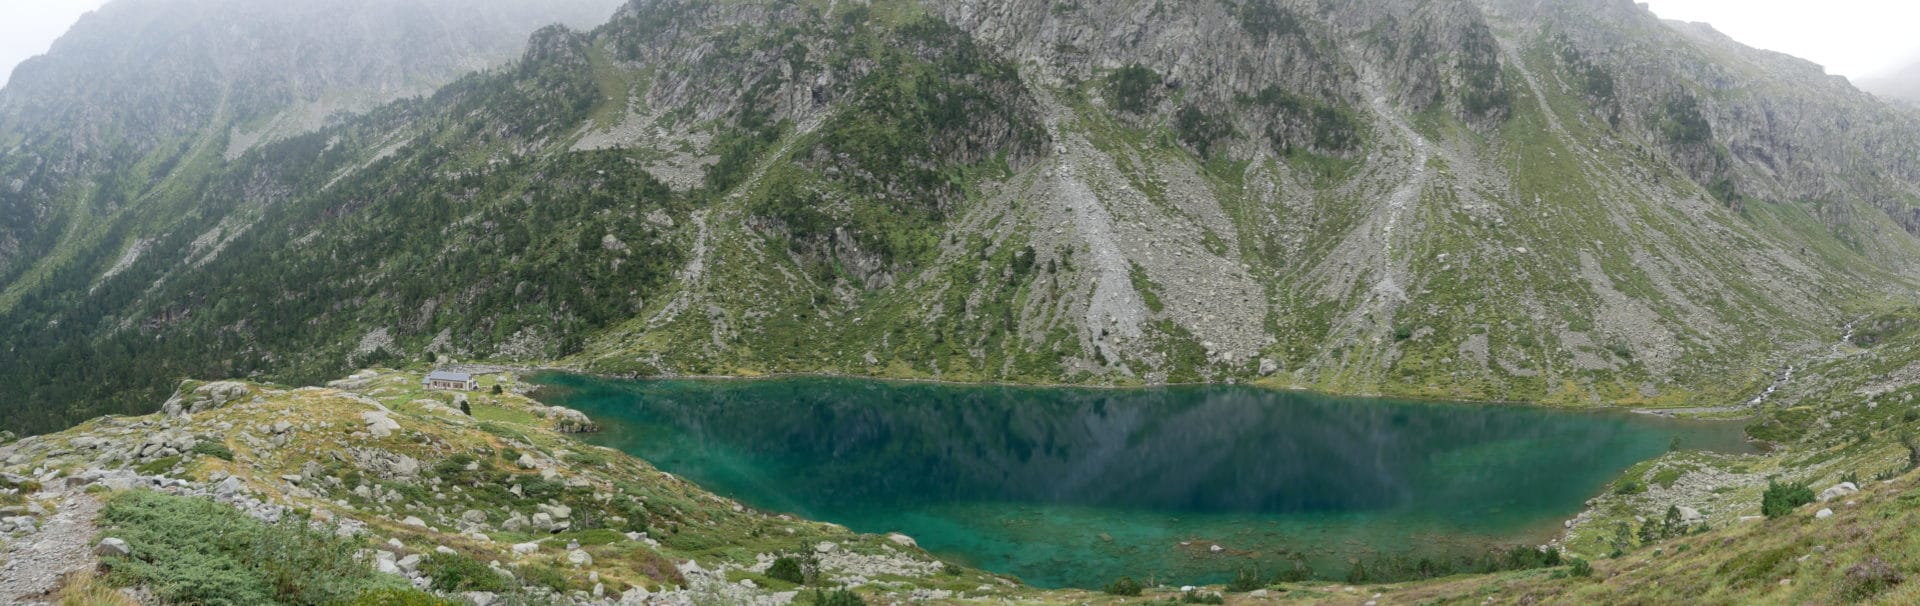 Lac d'Estom - Pyrénées